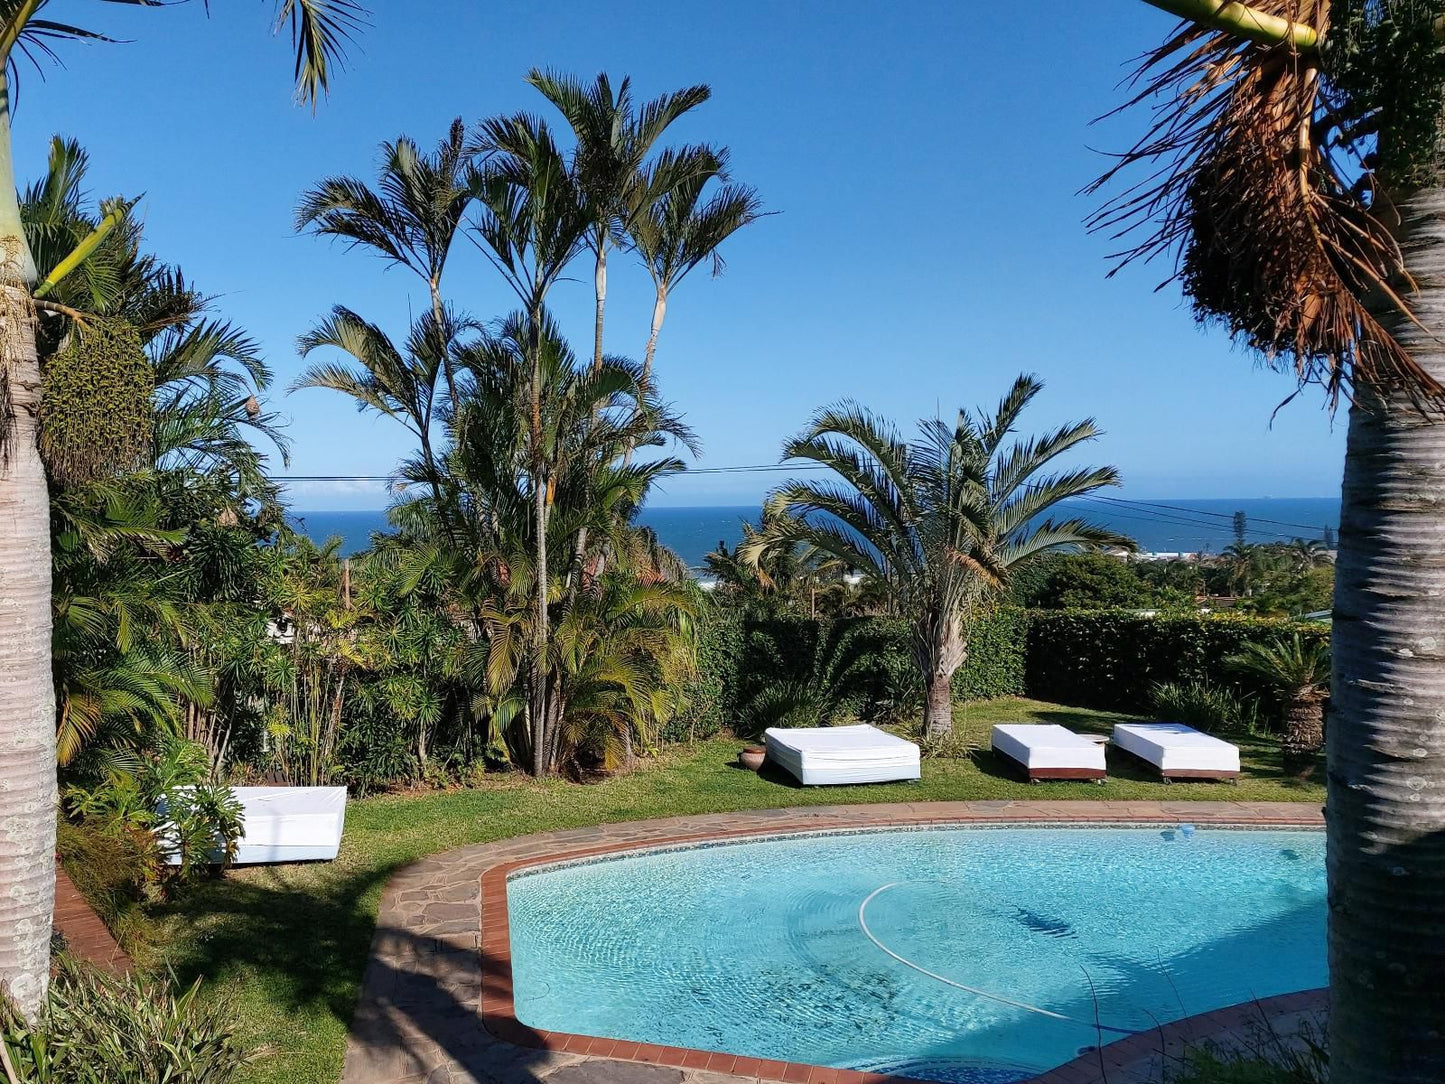 Jakita S Guest House Ballito Kwazulu Natal South Africa Beach, Nature, Sand, Palm Tree, Plant, Wood, Garden, Swimming Pool